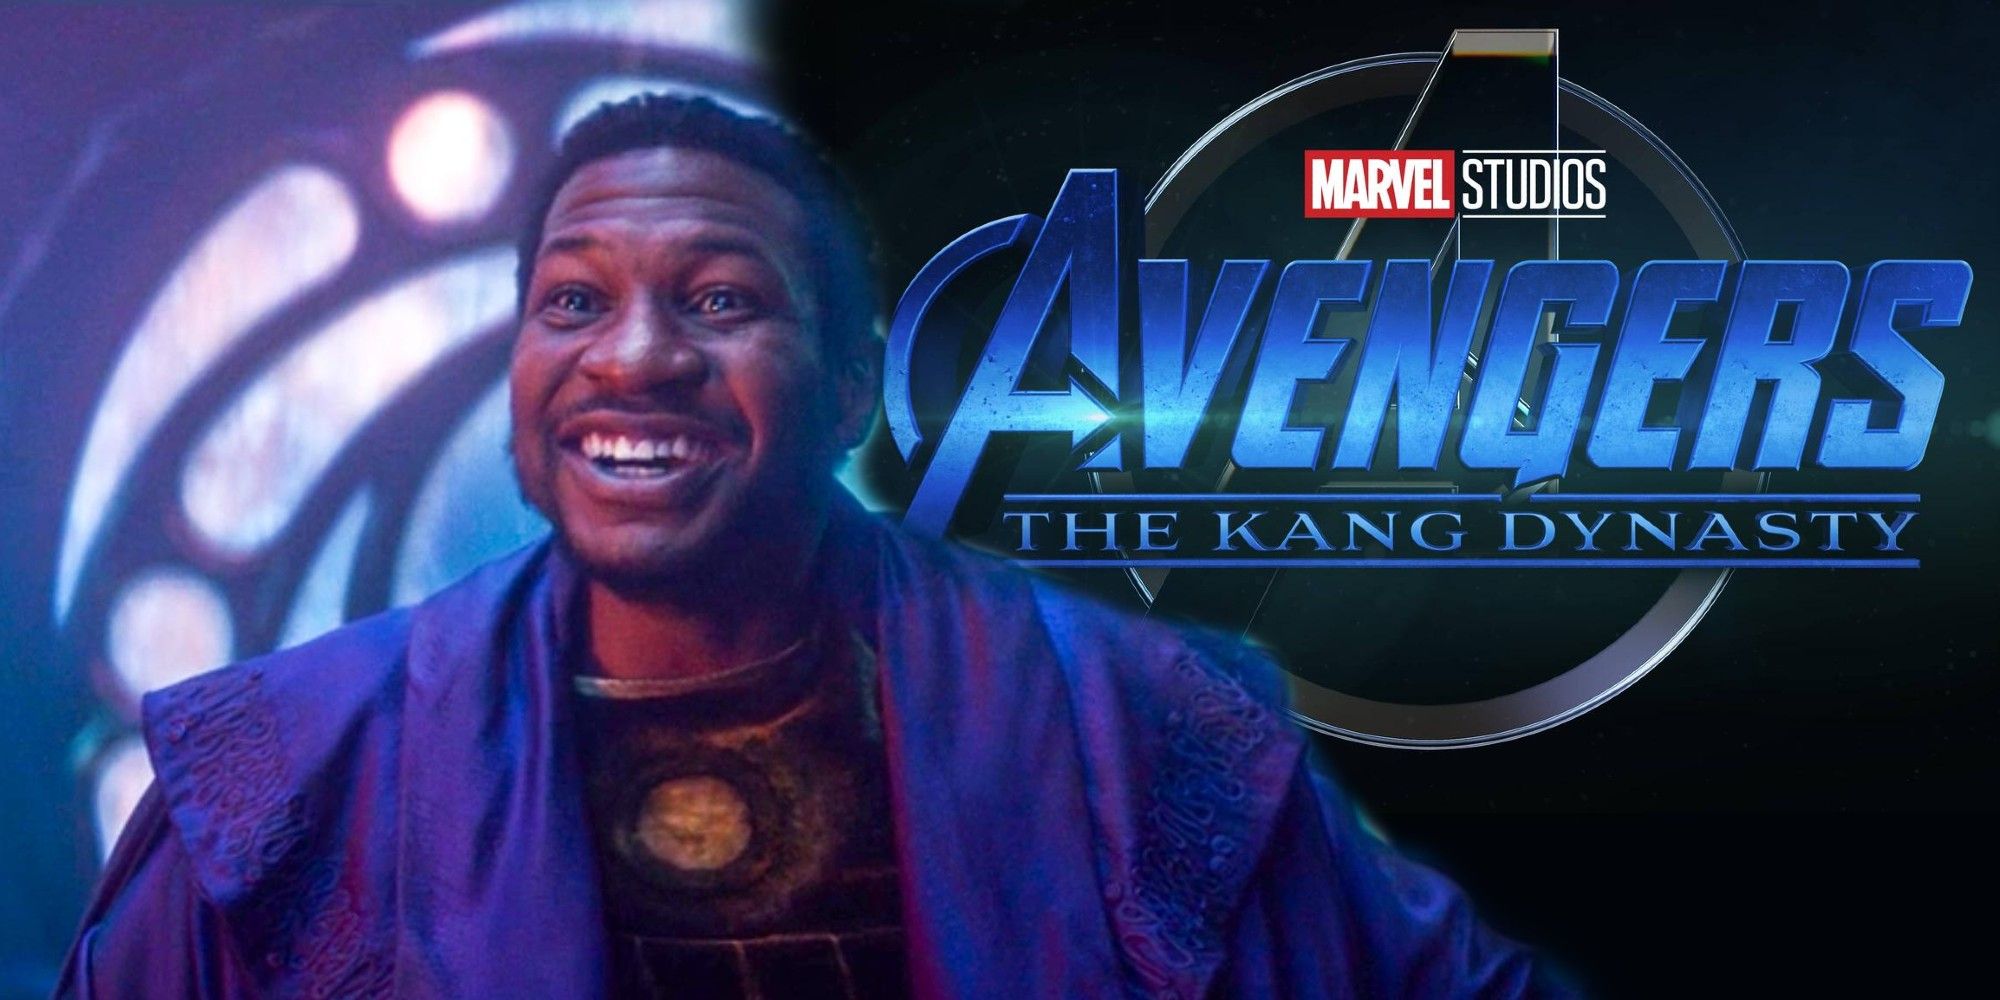 Avengers: The Kang Dynasty Recruits New Head Writer - Men's